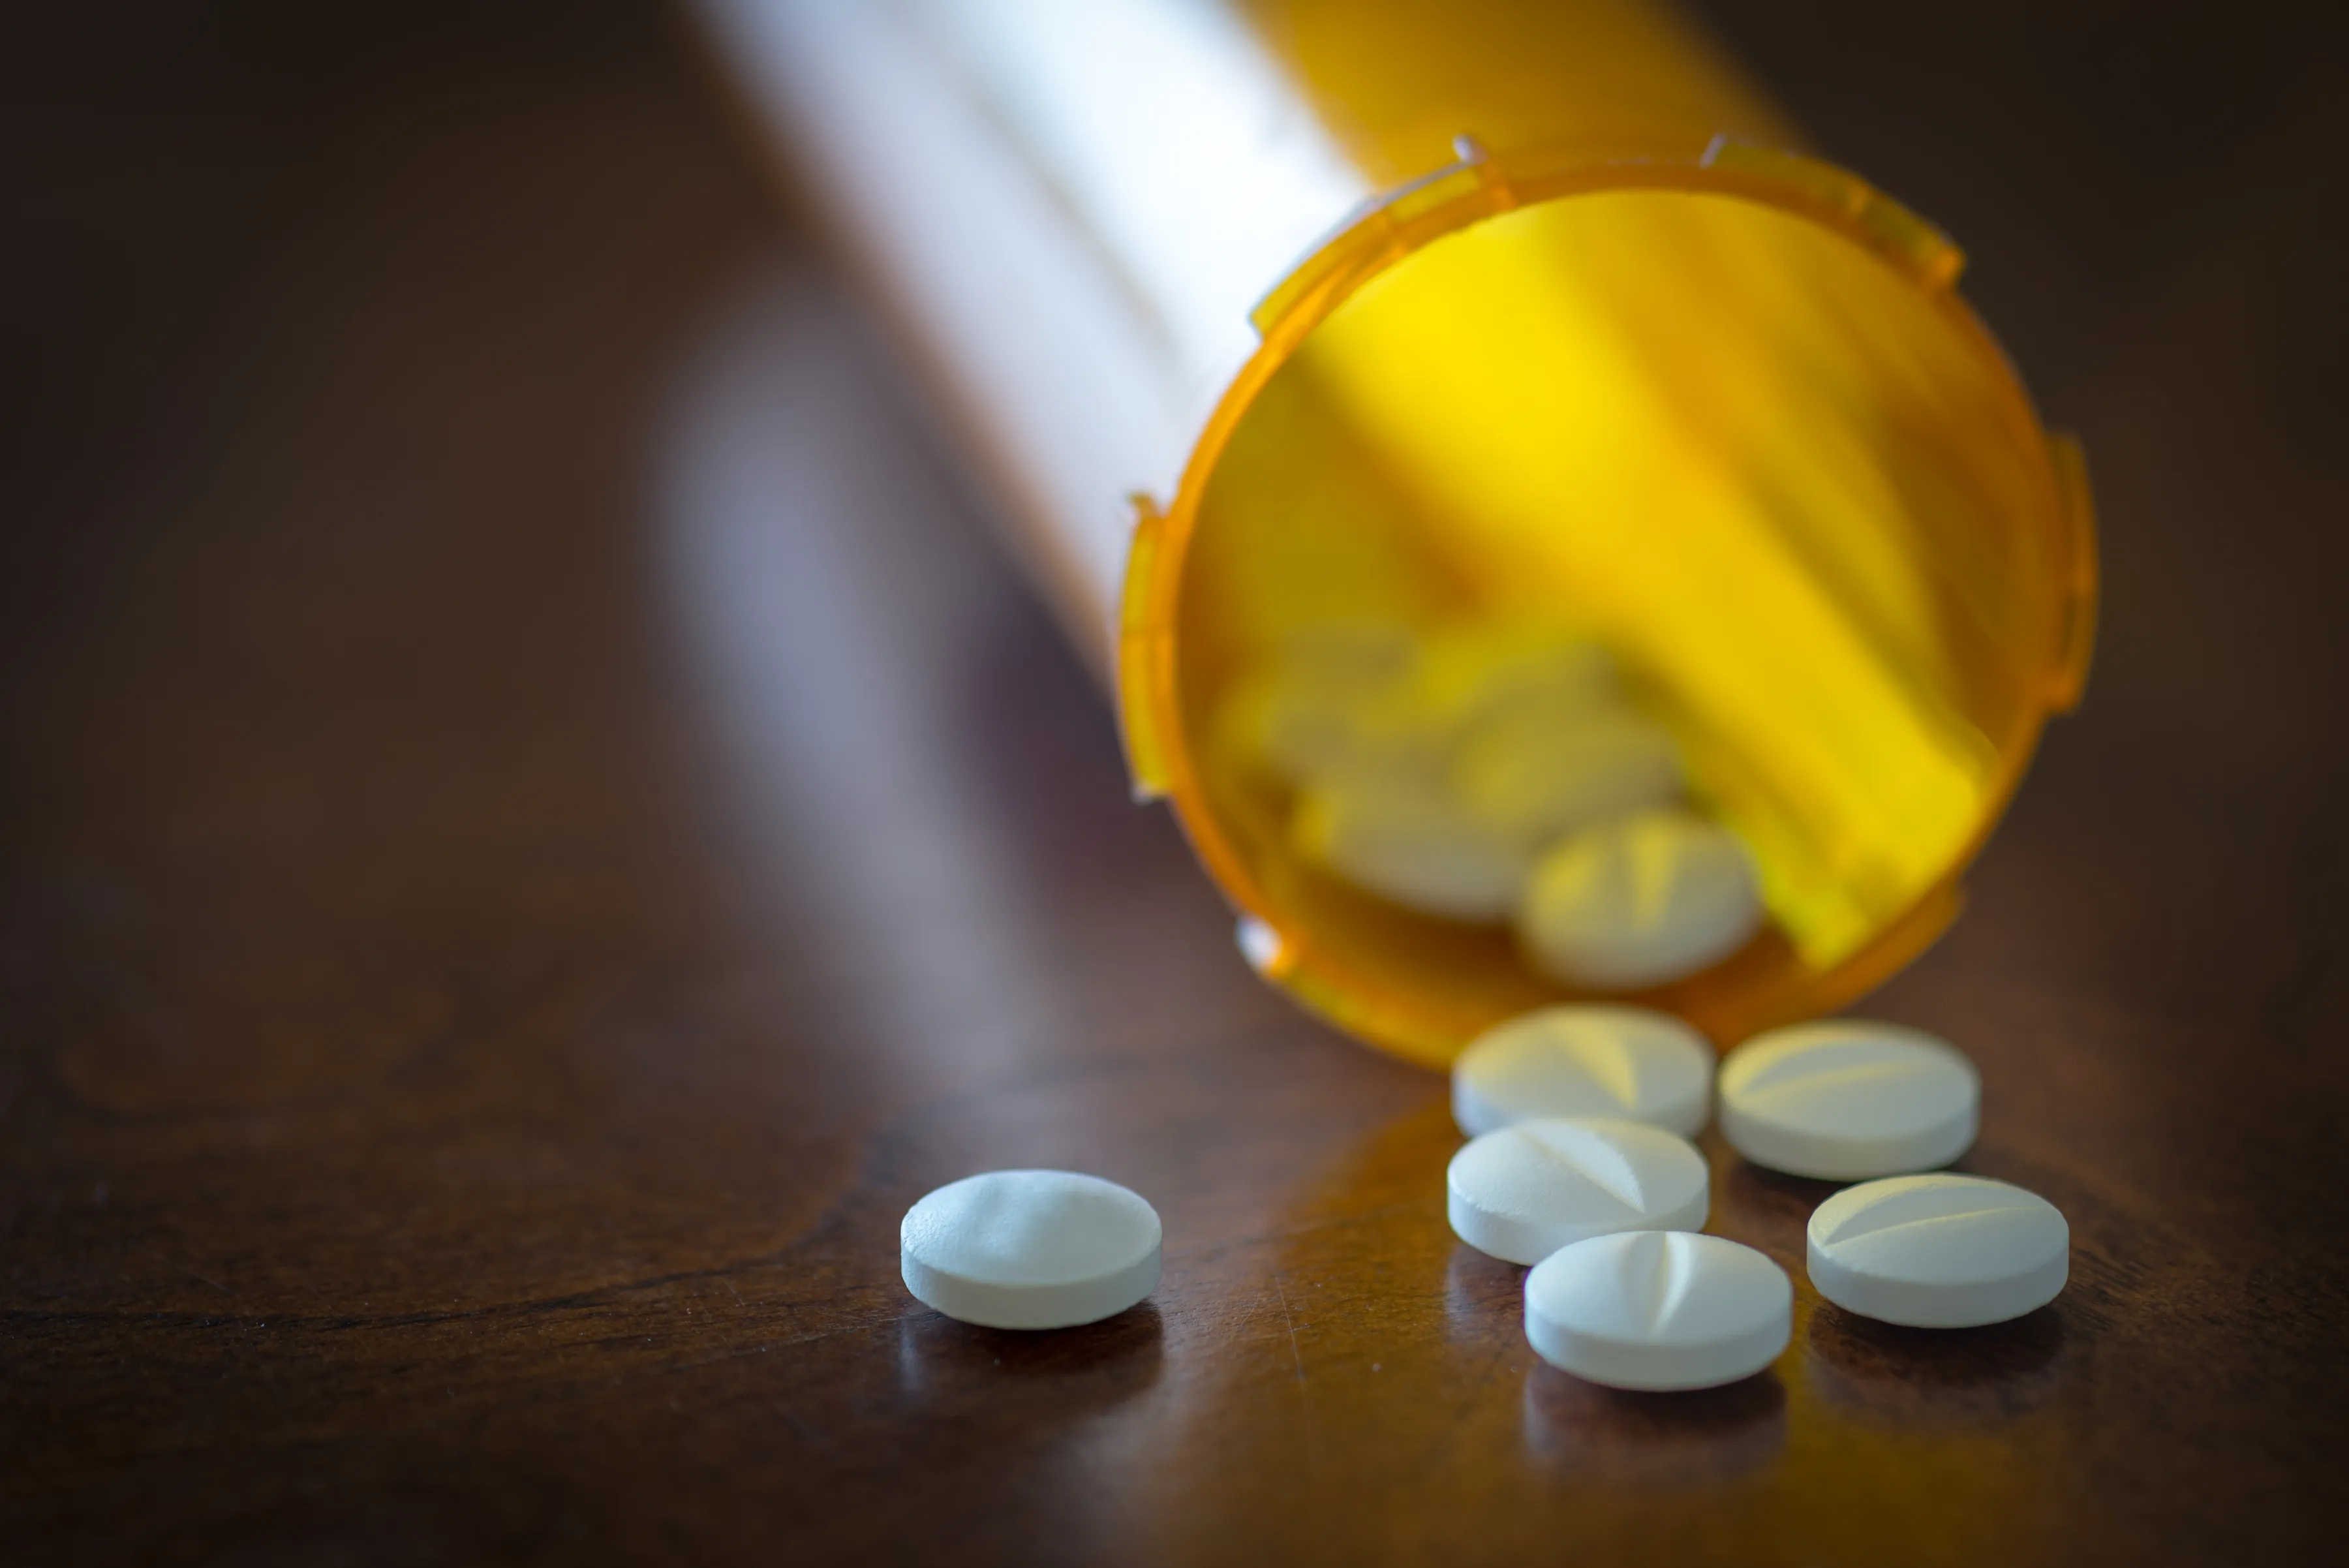 California May Prescribe a Dose of Shame to Slow Pharma Price Hikes